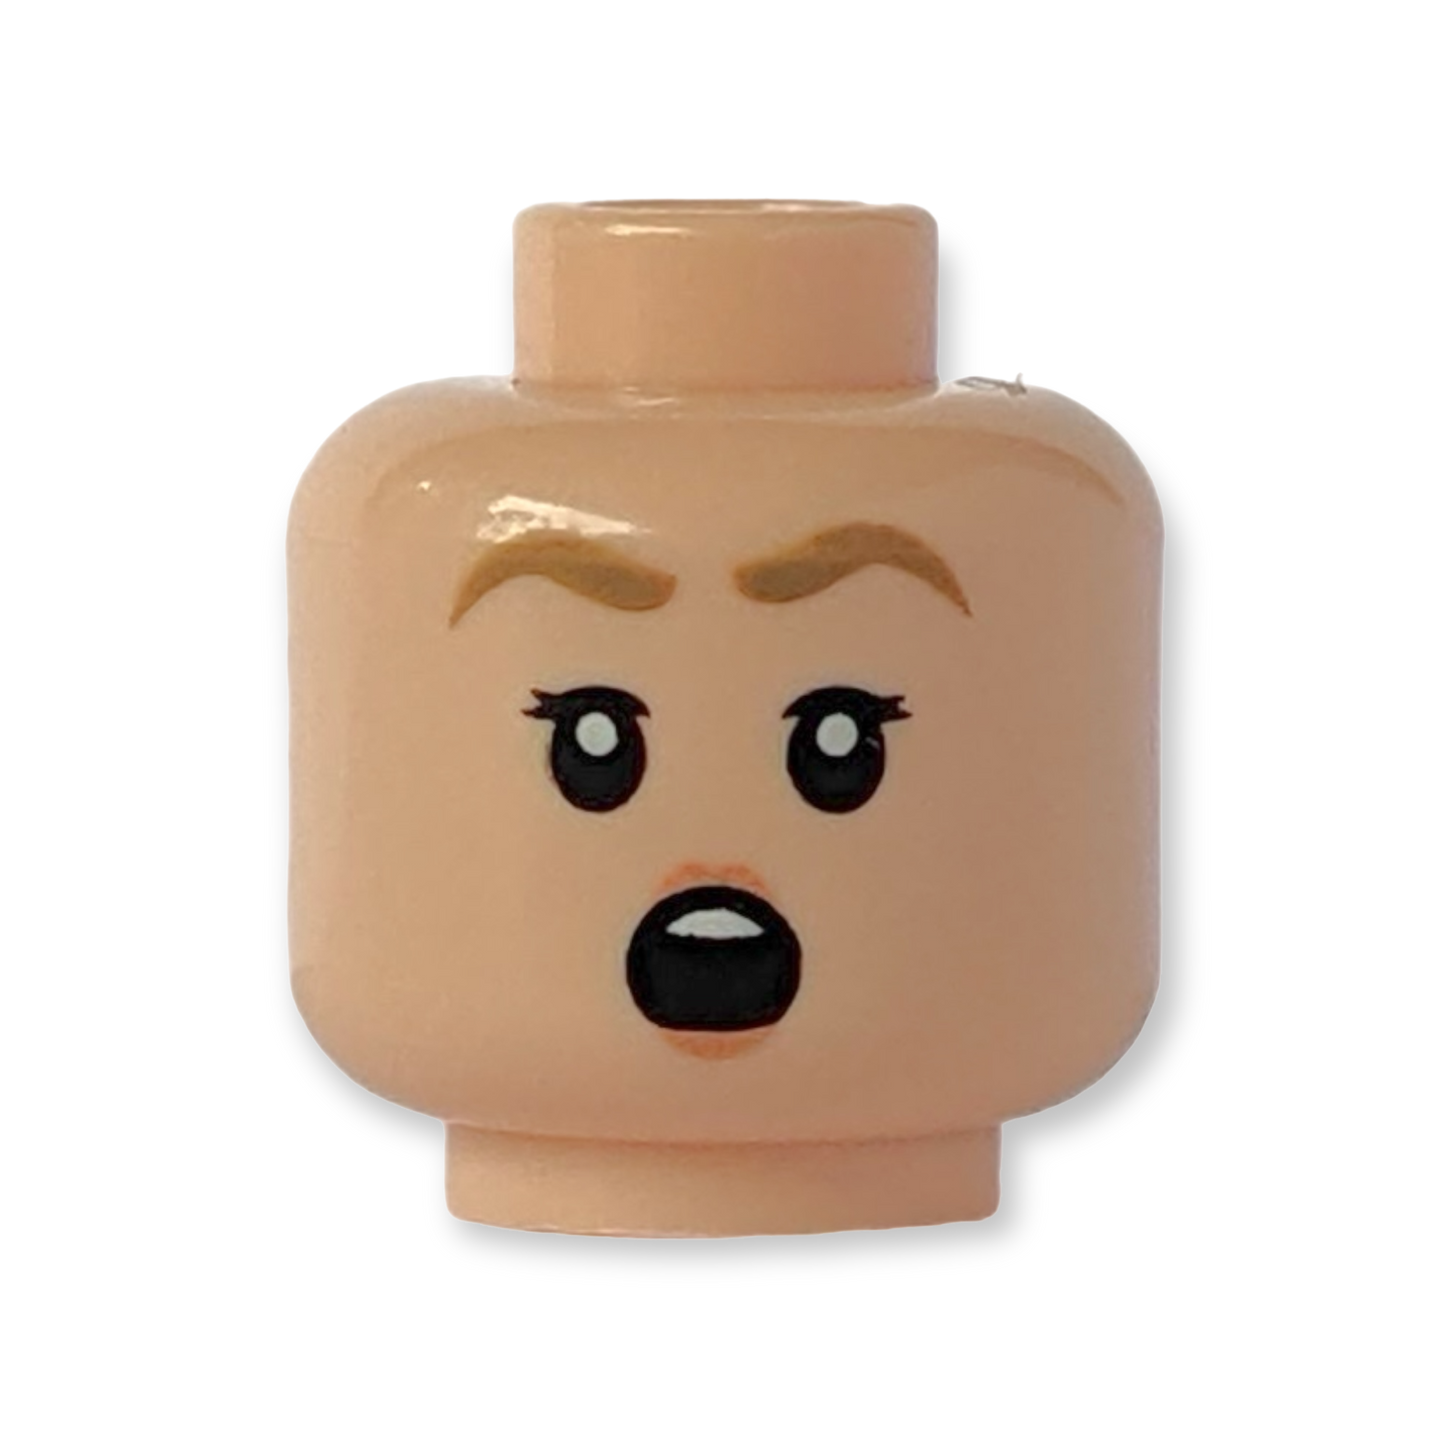 LEGO Head - 3462 Dunkelbraune Augenbrauen Lippen in Nougat Lächeln / Überrascht